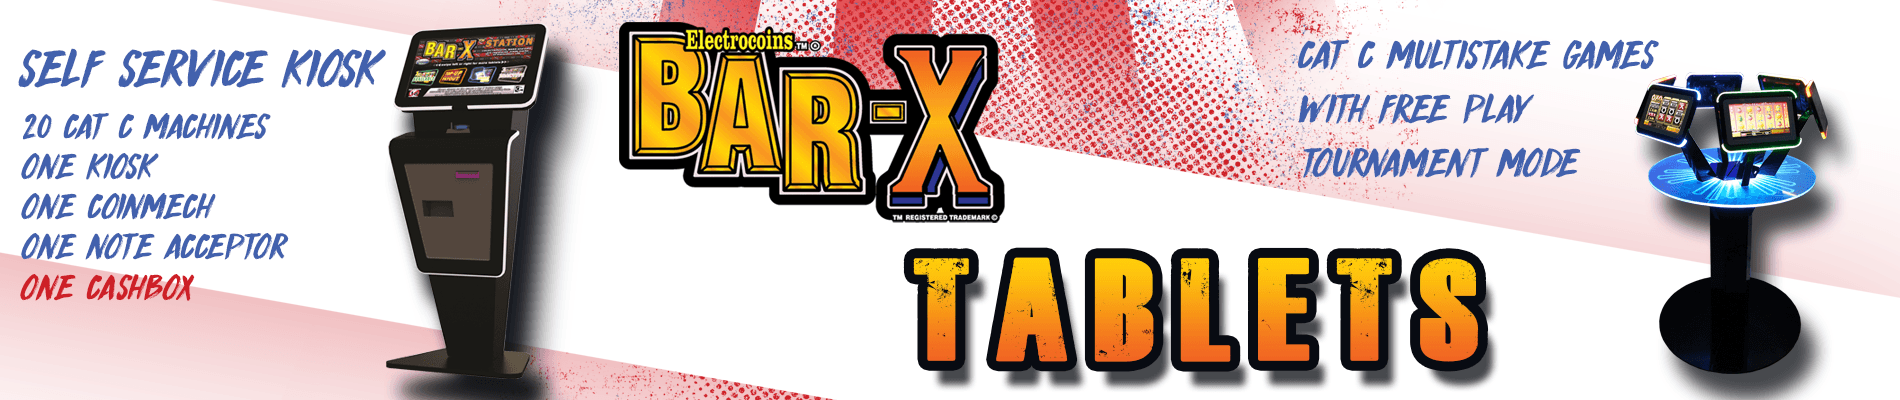 Bar-X Tablets